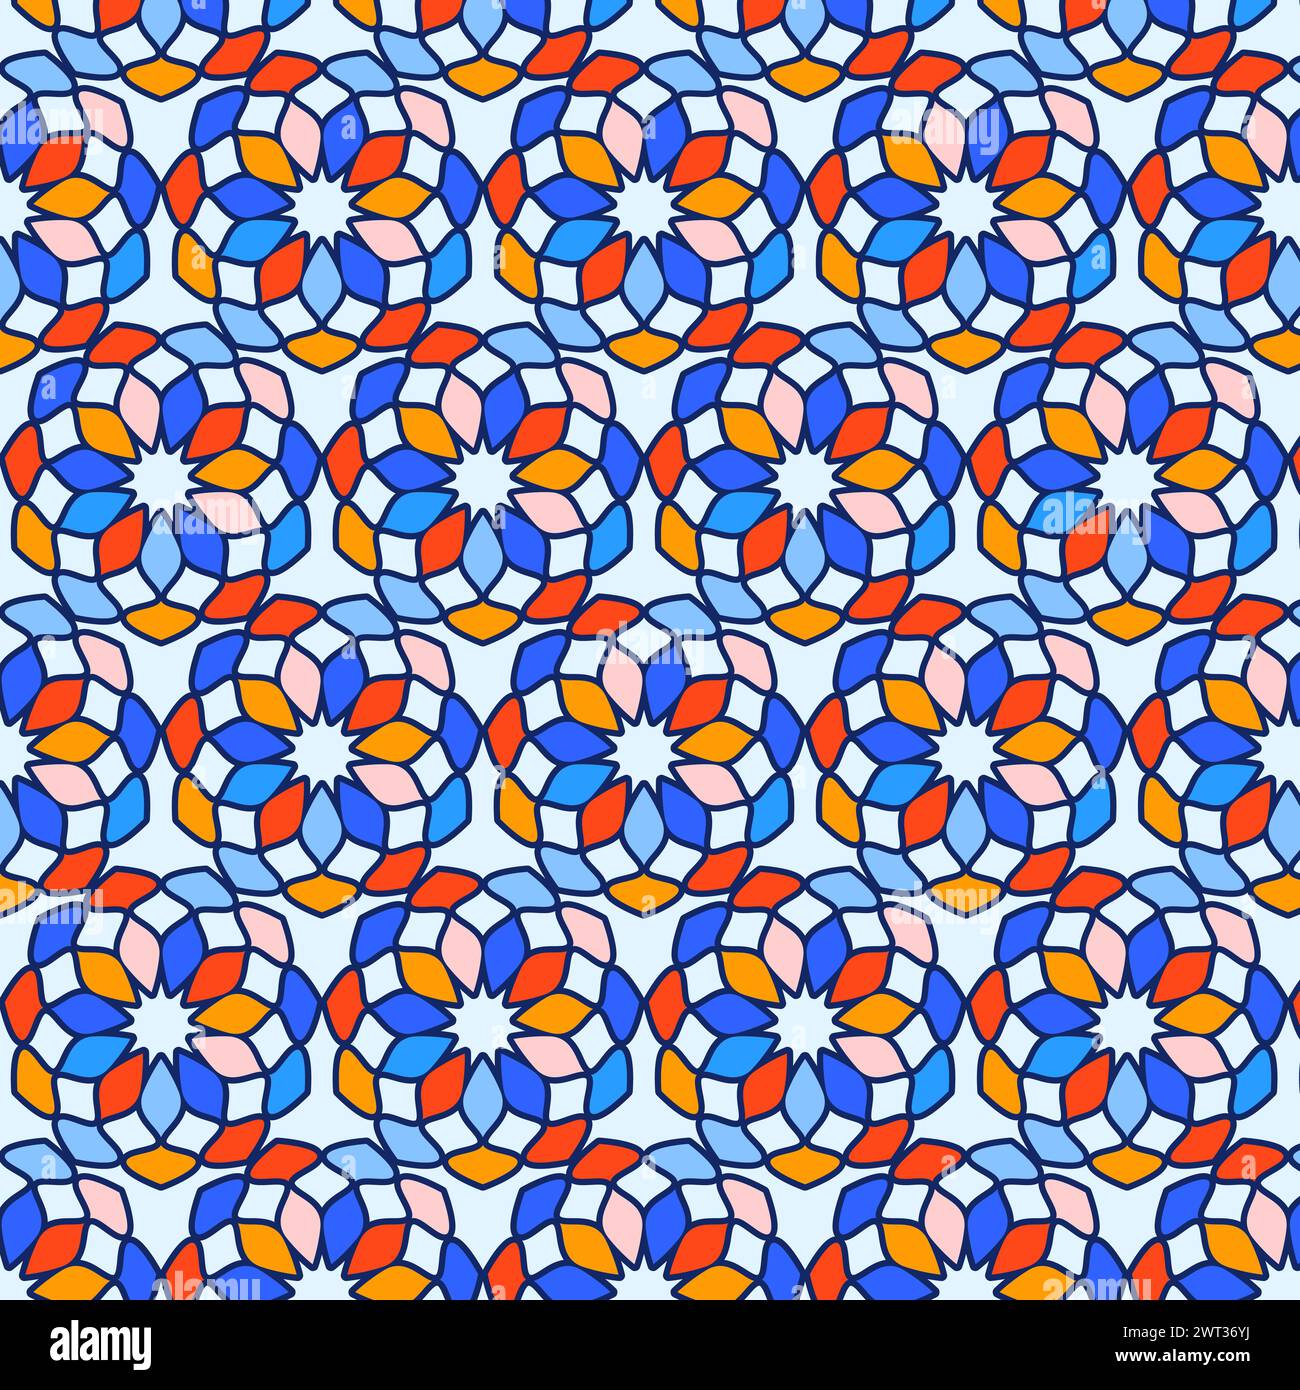 Nahtloses Muster Buntglasfenster Kaleidoskop farbenfrohes Muster. Mosaikvektor-Illustration. Isoliert auf hellblauem Hintergrund. Stock Vektor